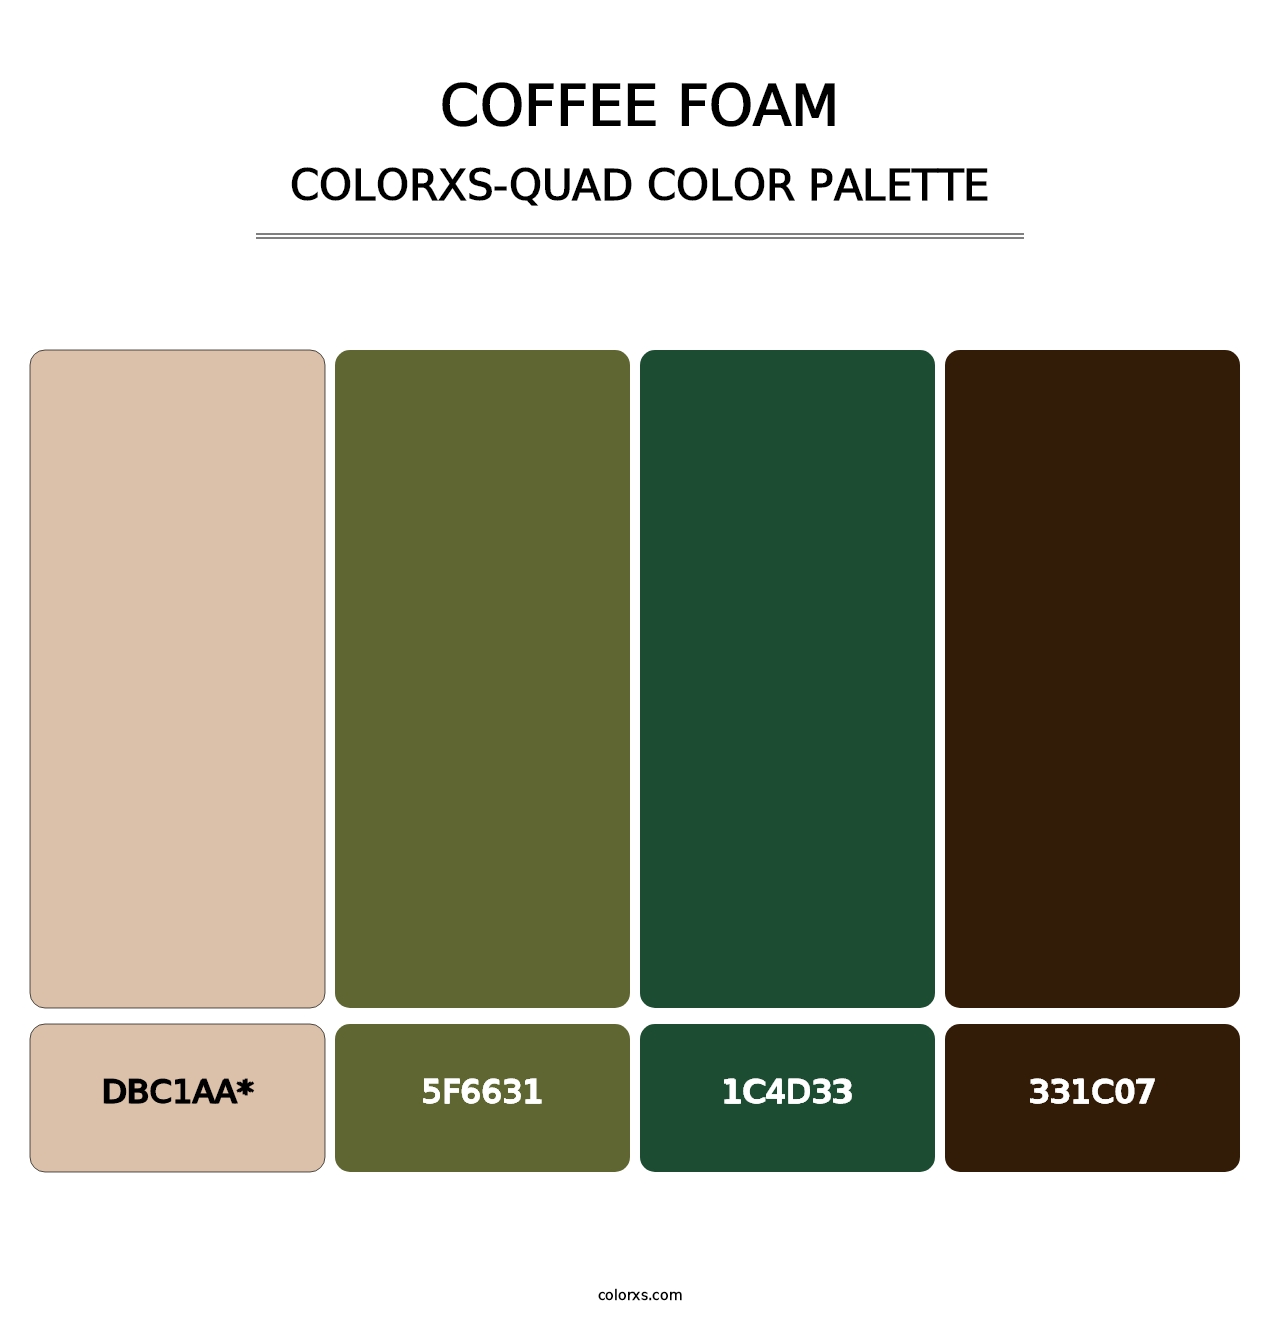 Coffee Foam - Colorxs Quad Palette